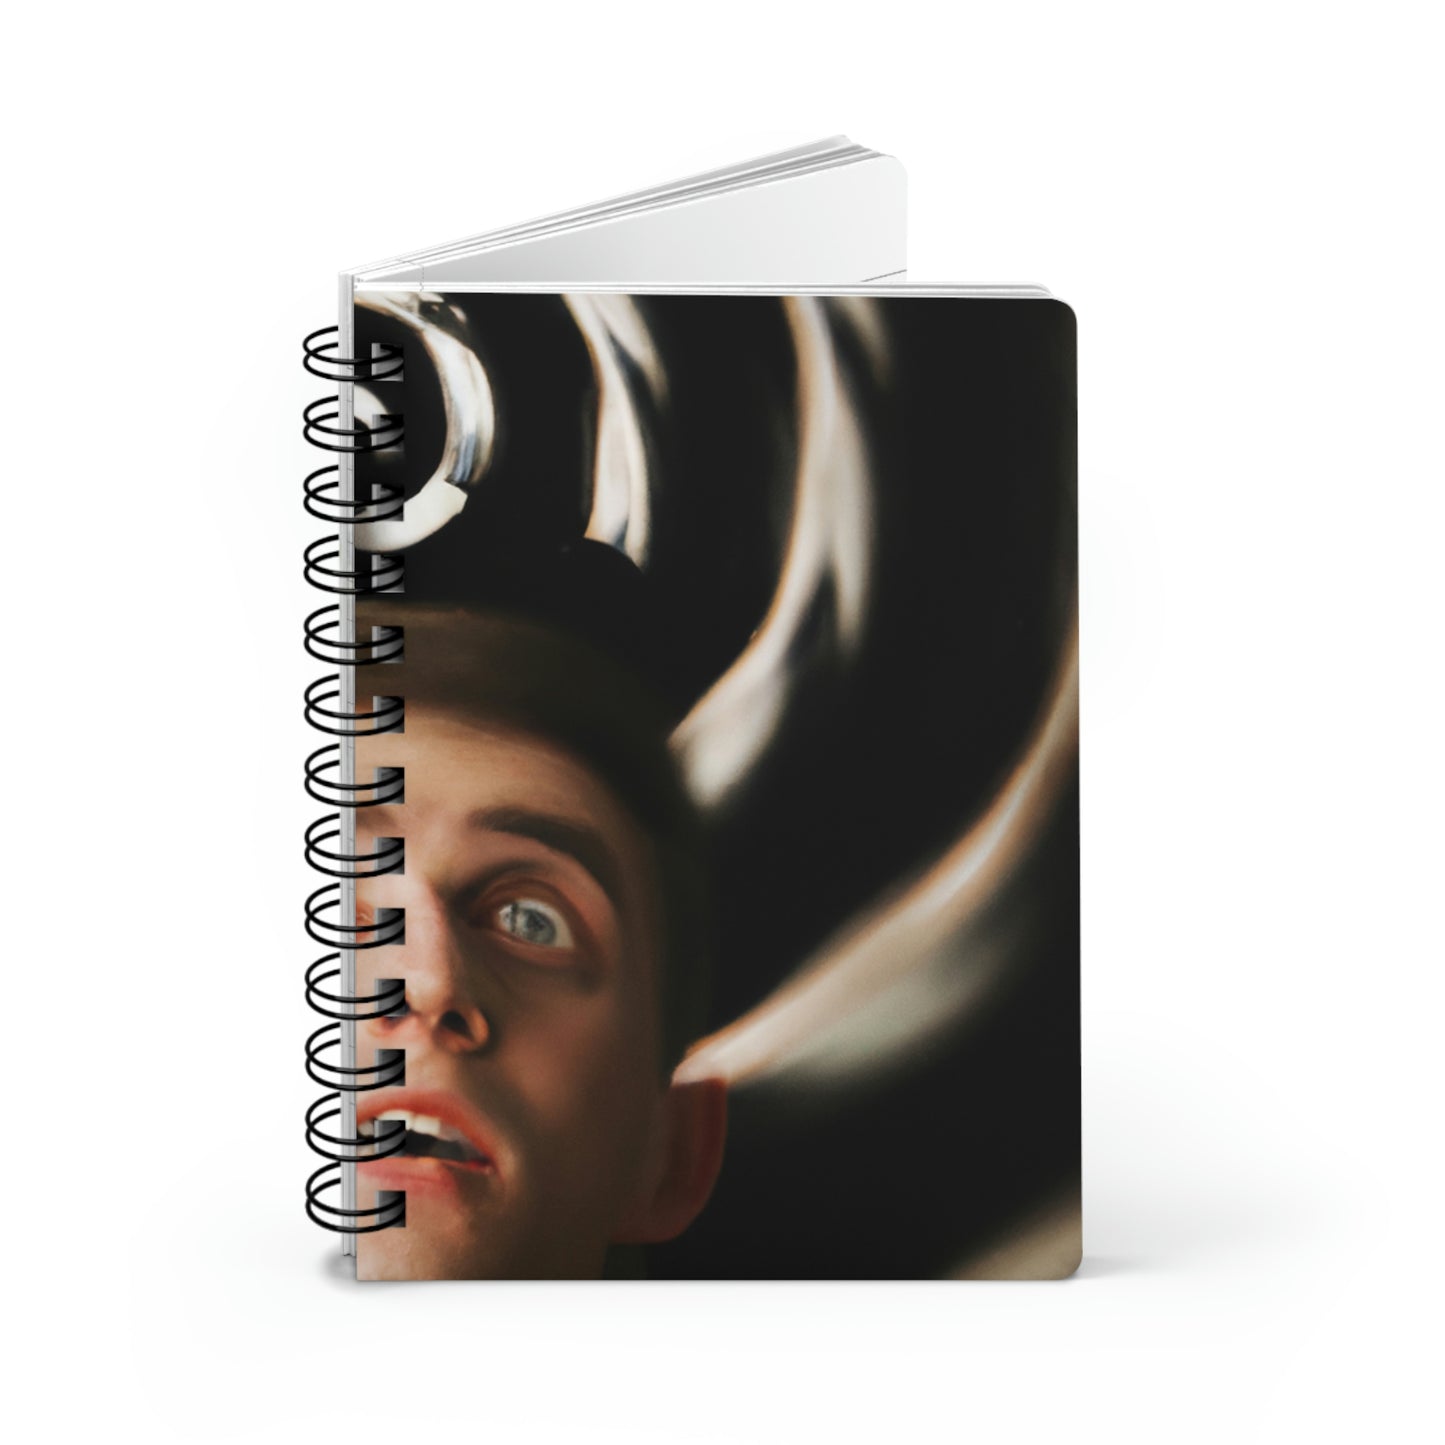 The Endless Nightmare - The Alien Cuaderno encuadernado en espiral